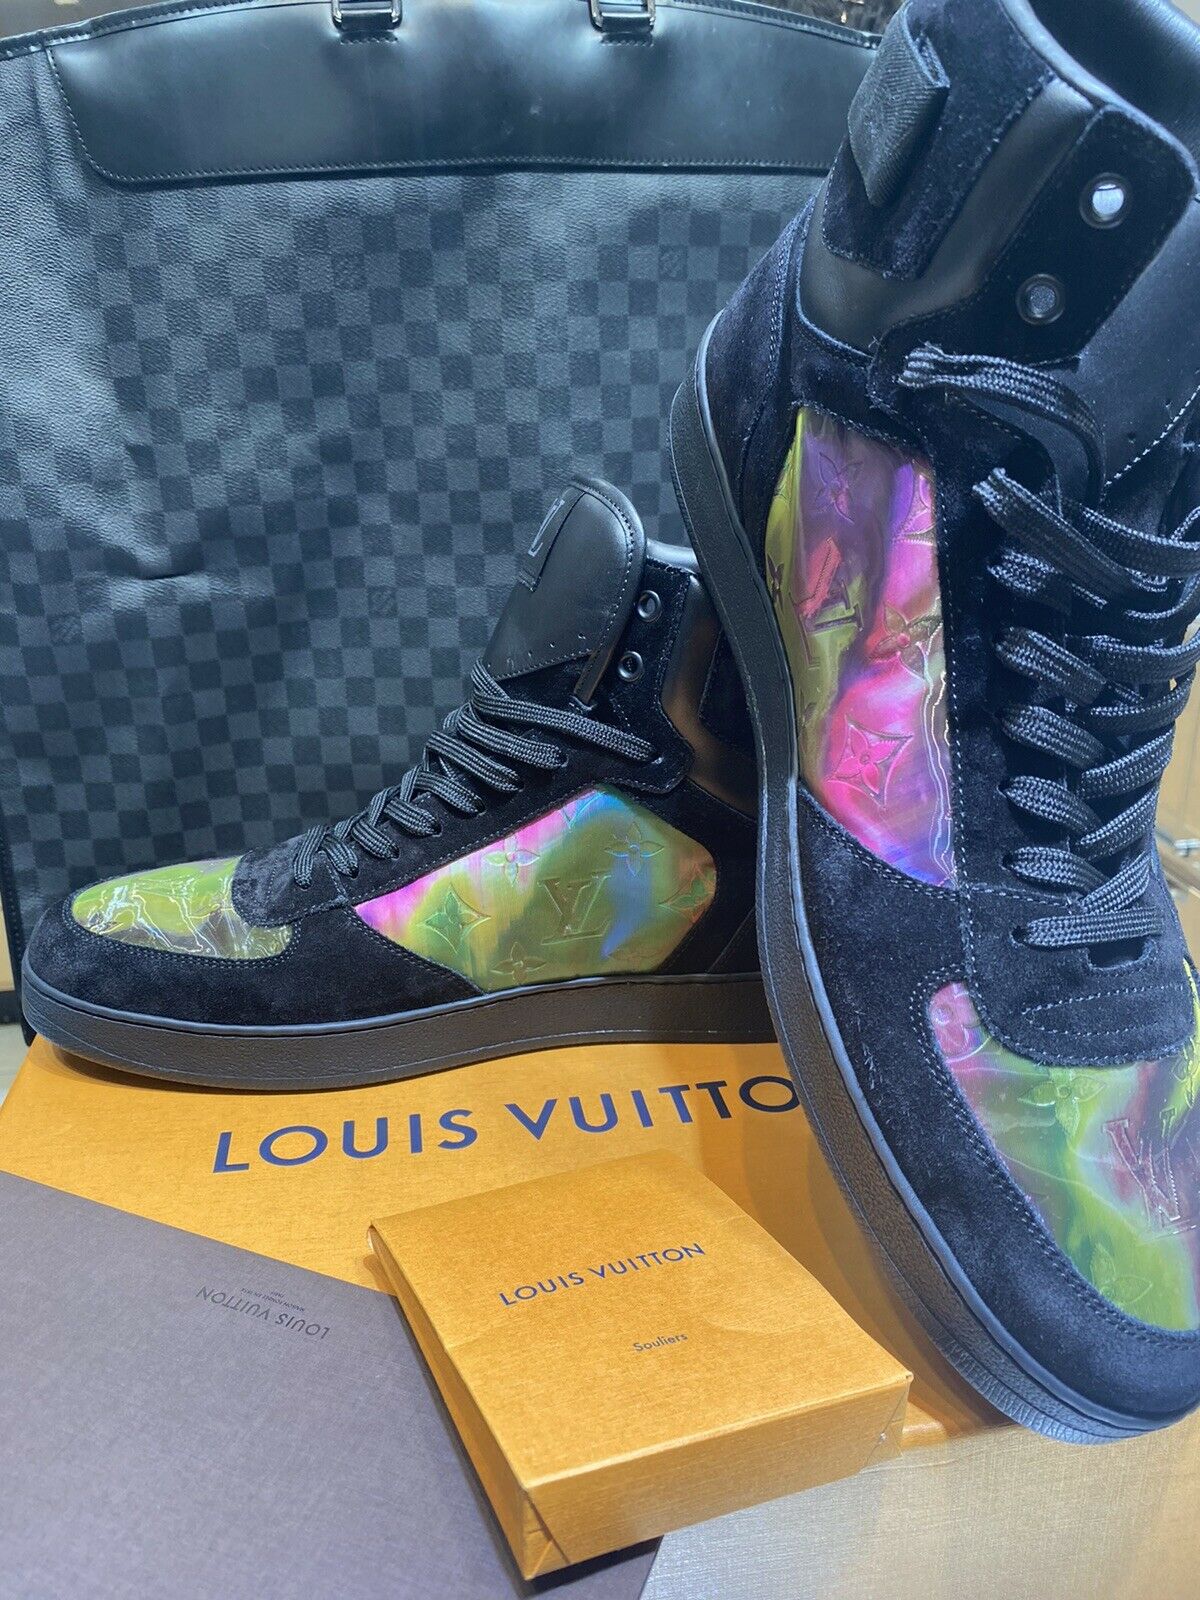 Louis Vuitton, Shoes, Louis Vuitton Iridescent Luxembourg Shoes